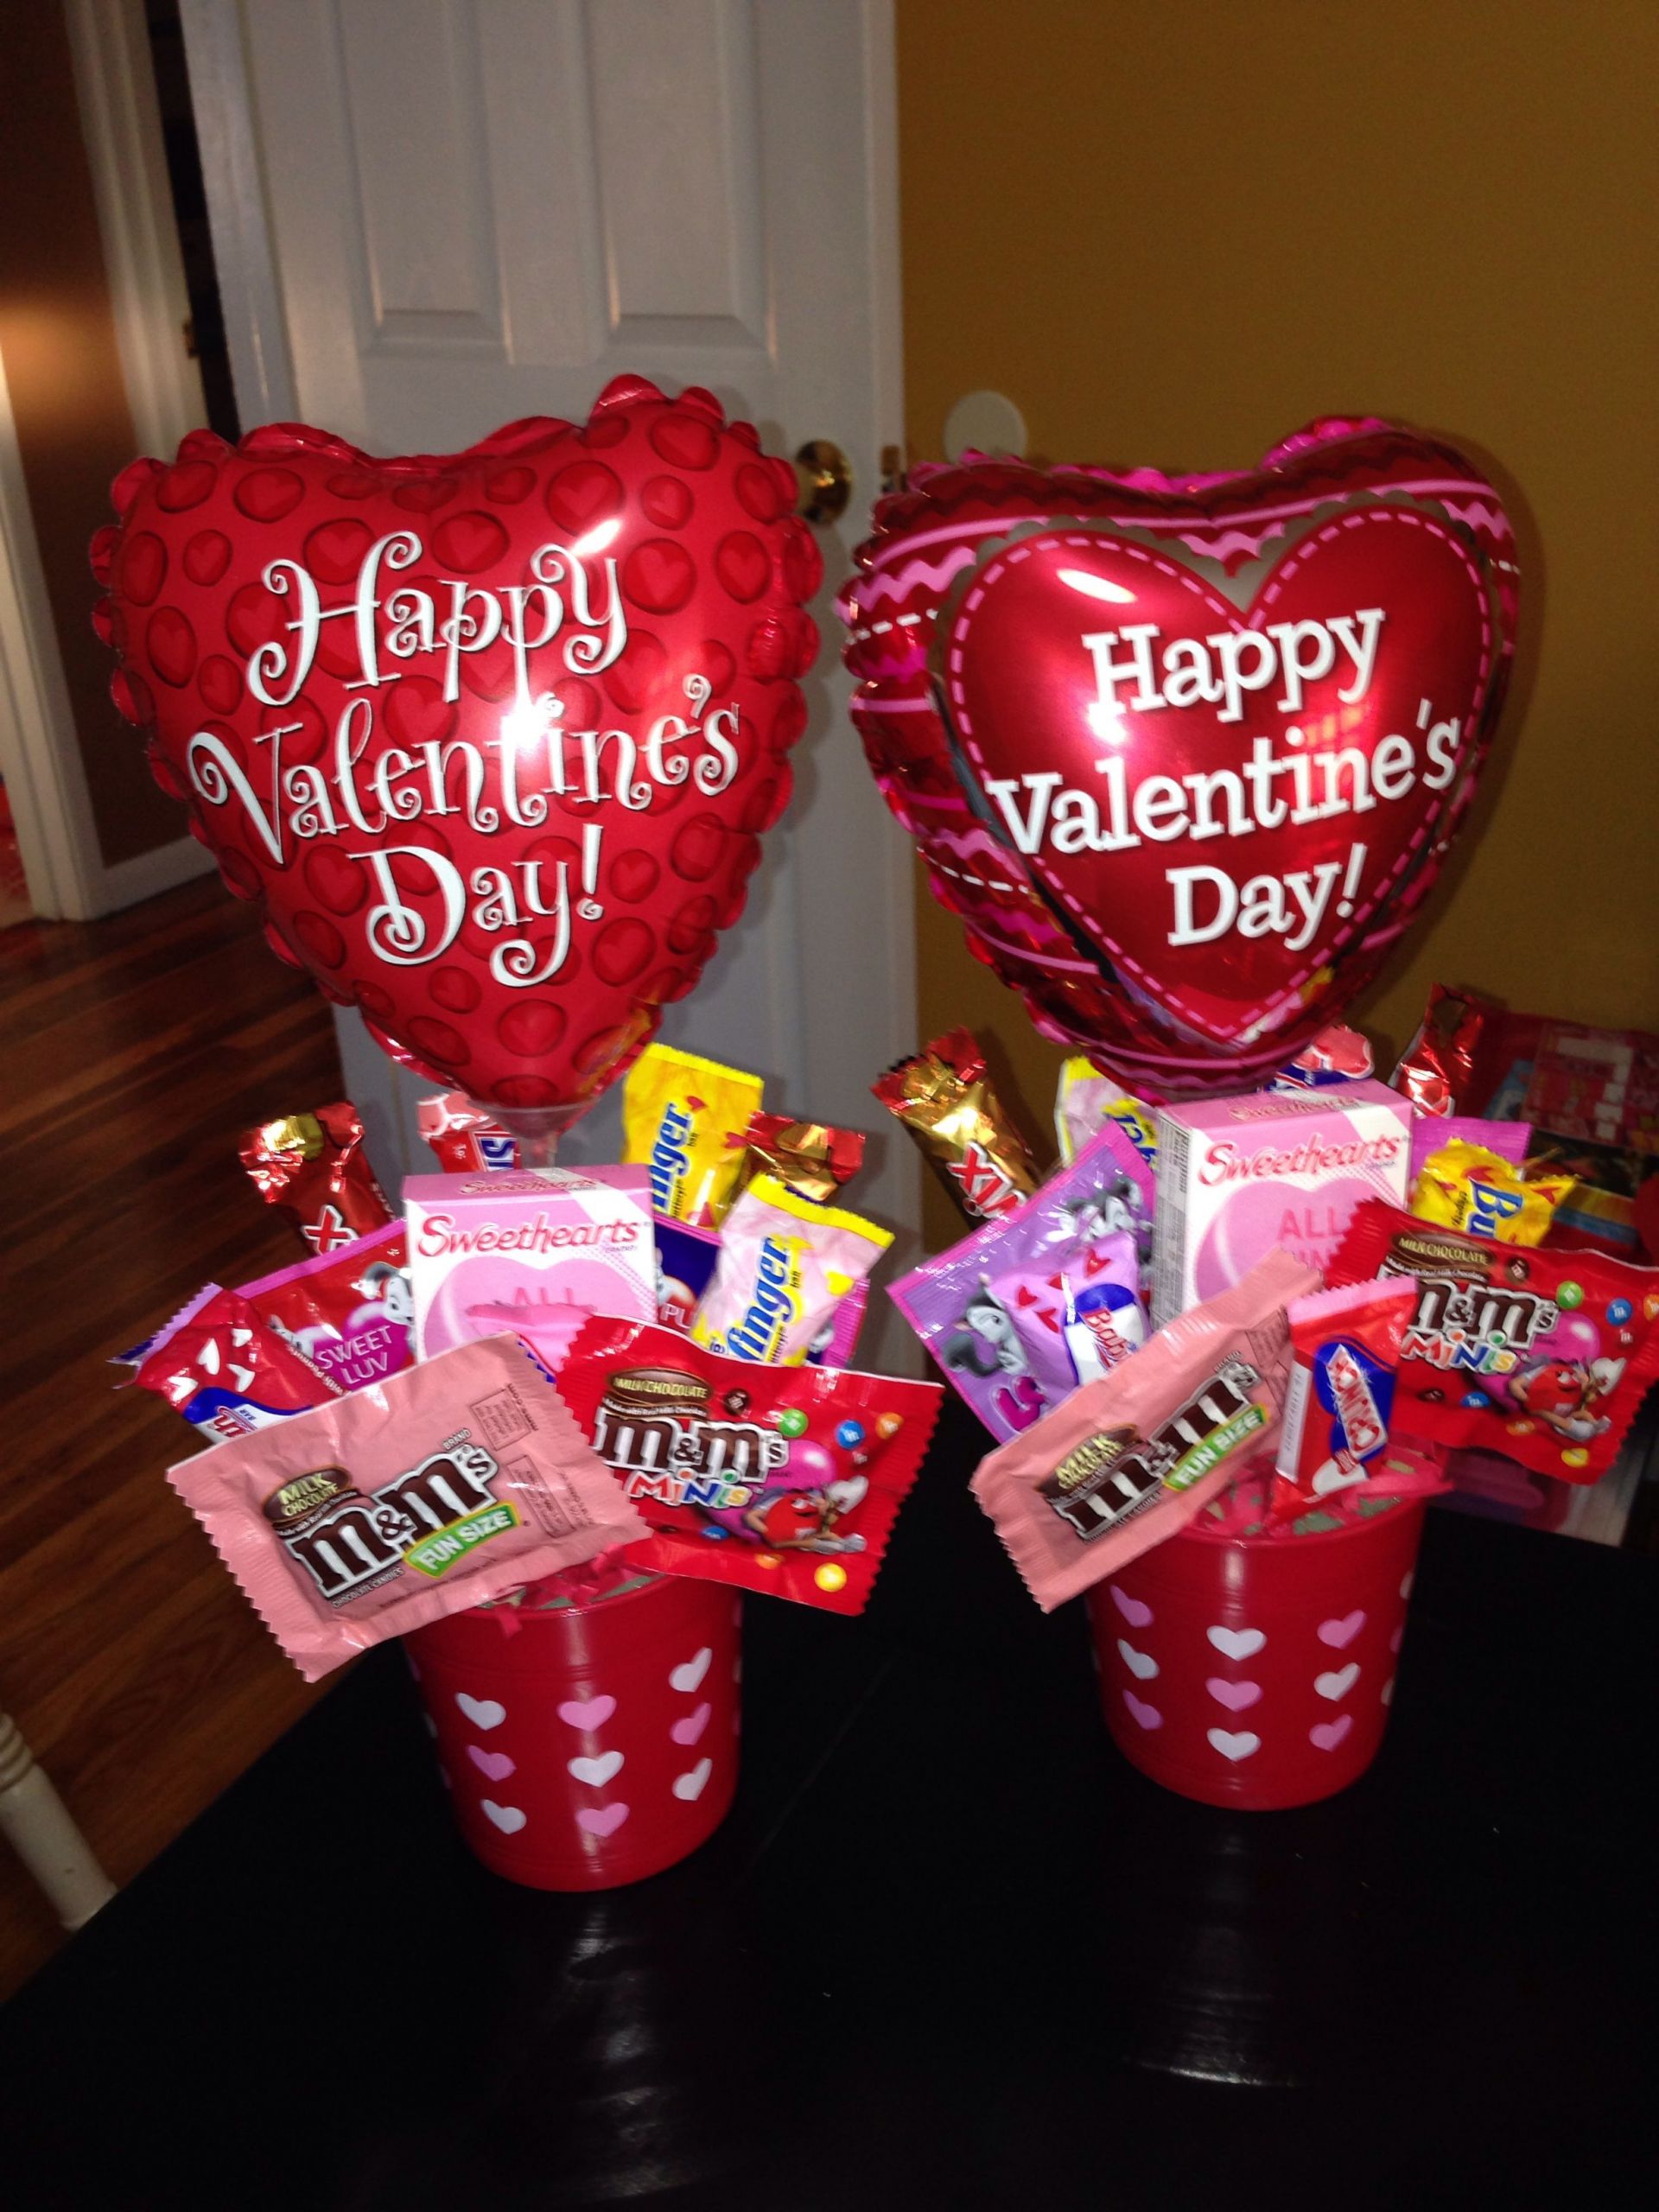 Childrens Valentines Gift Ideas
 Small valentines bouquets